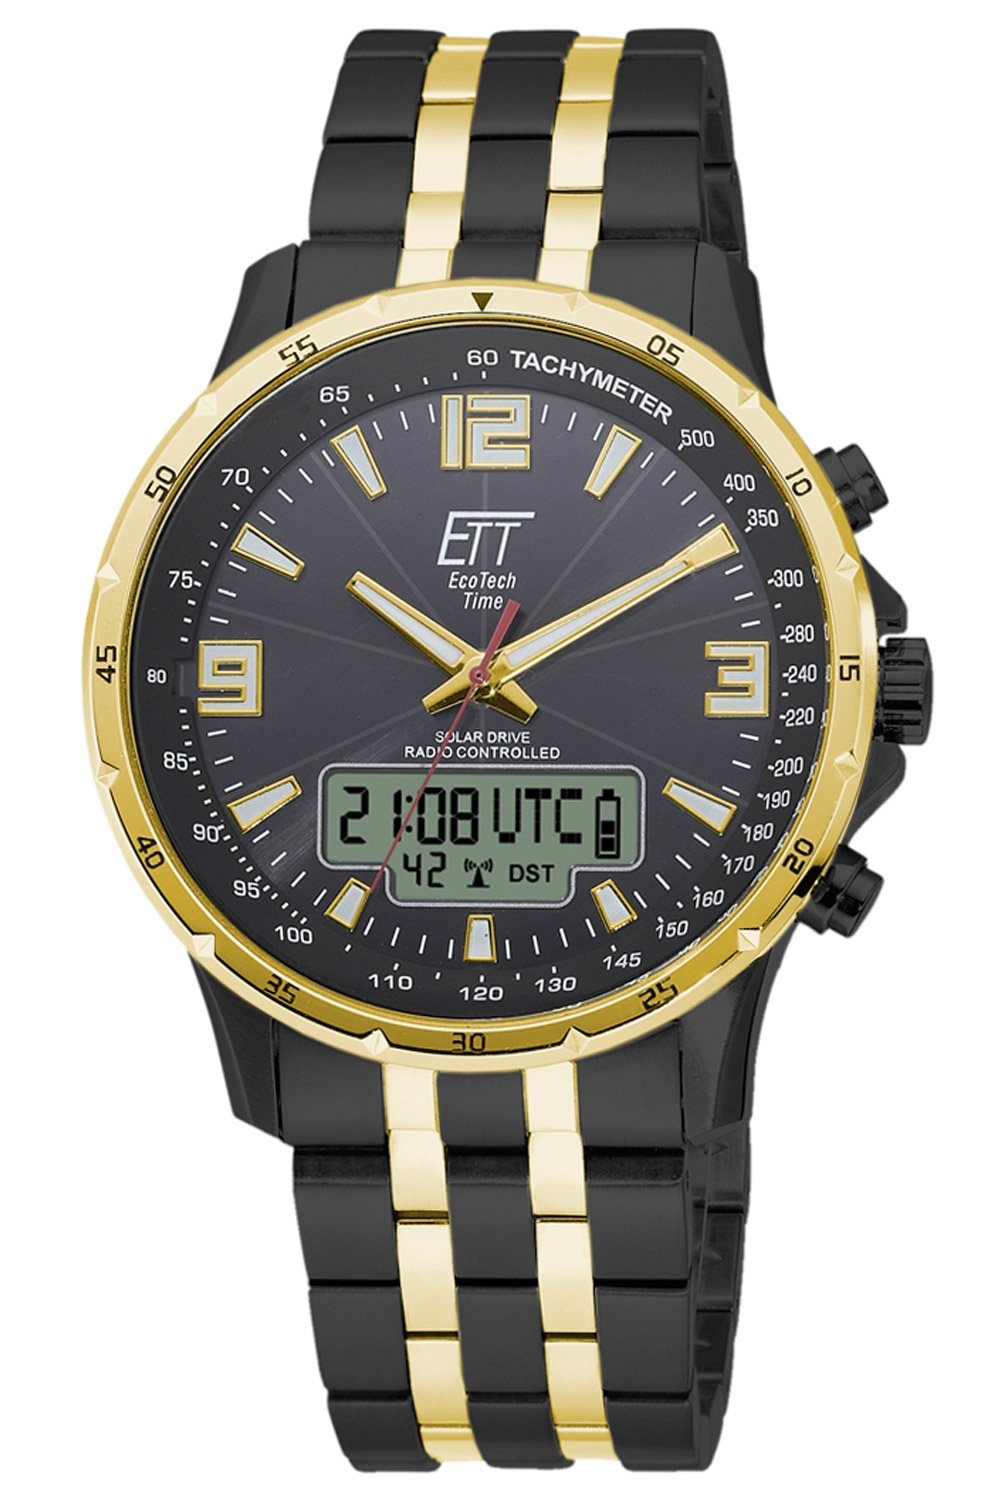 EGS-11567-21M Schwarz/Gold • Herrenuhr Arctica ETT Funk-Solar Professional Time Eco uhrcenter Tech